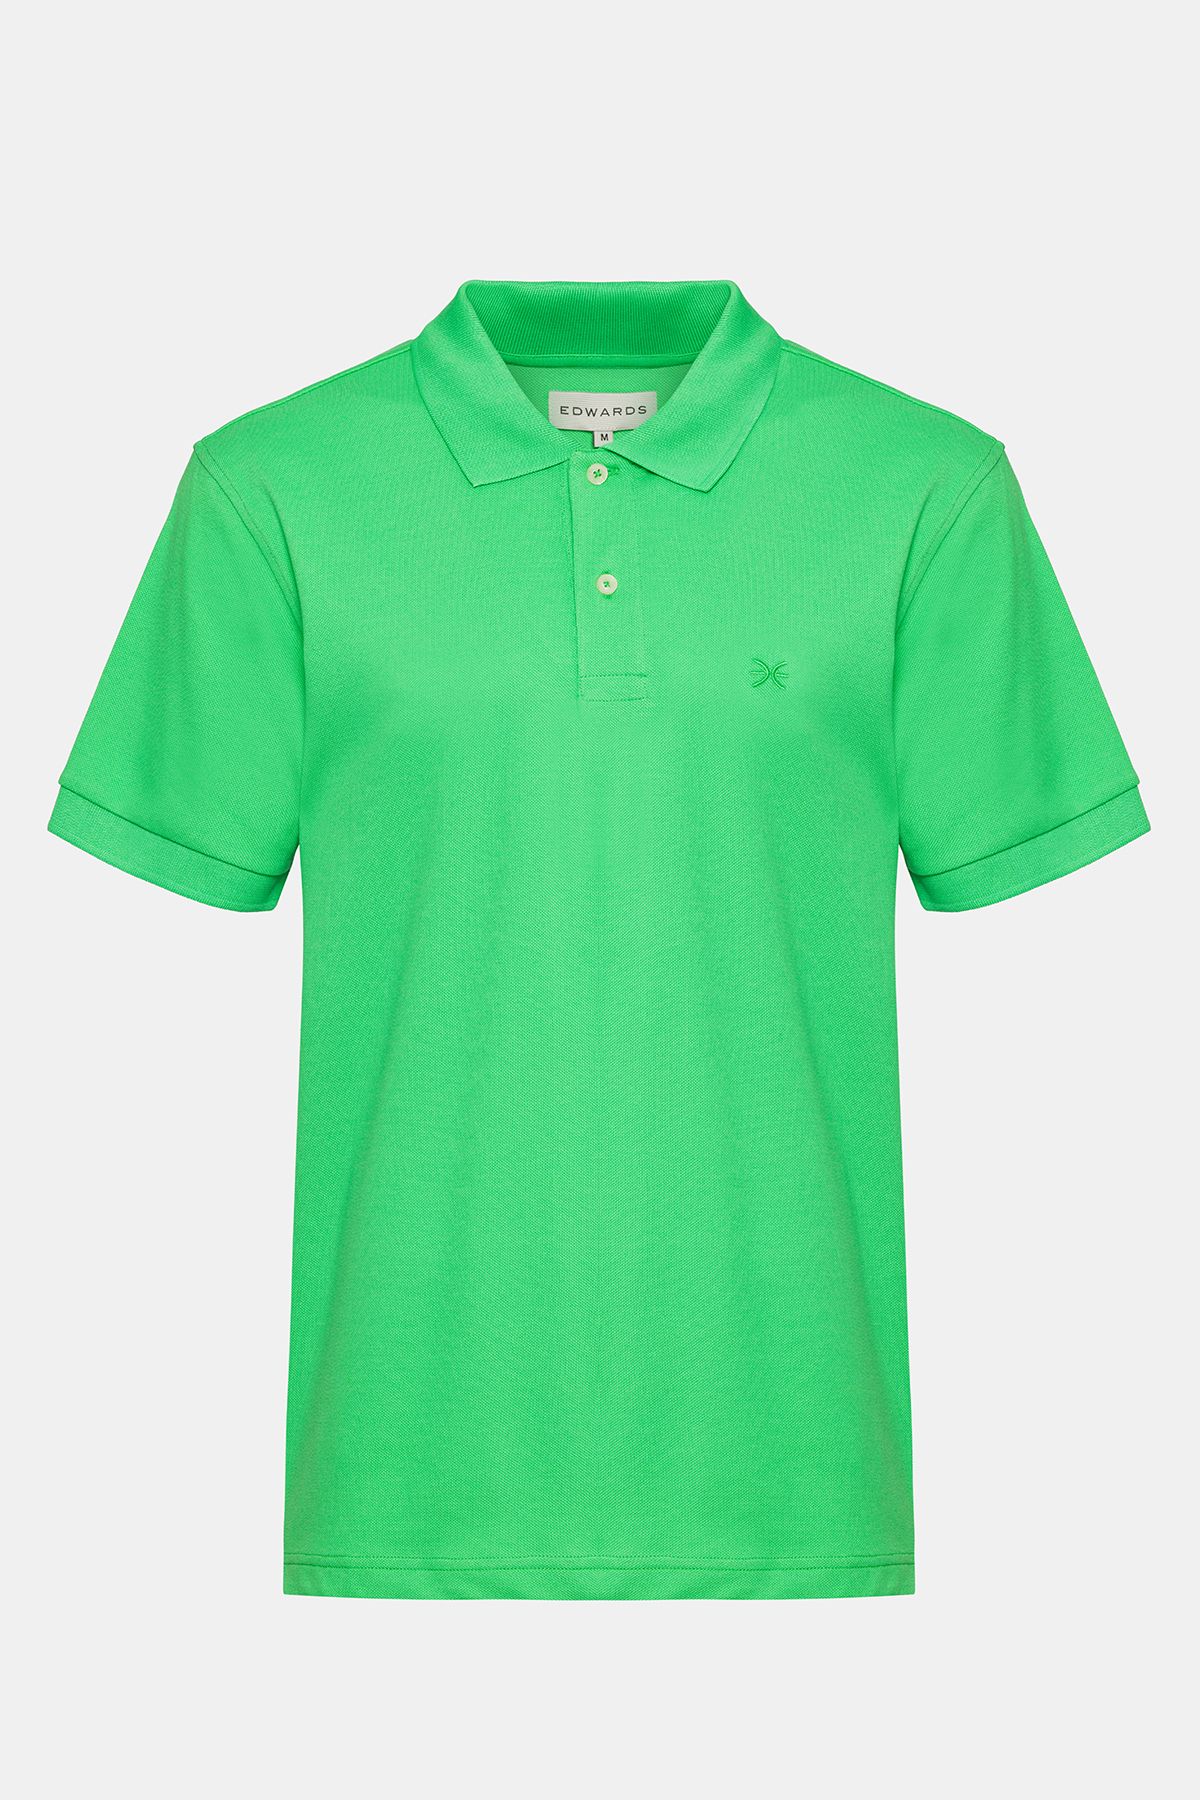 Edwards Erkek Yeşil Kısa Kollu Polo Yaka T-Shirt